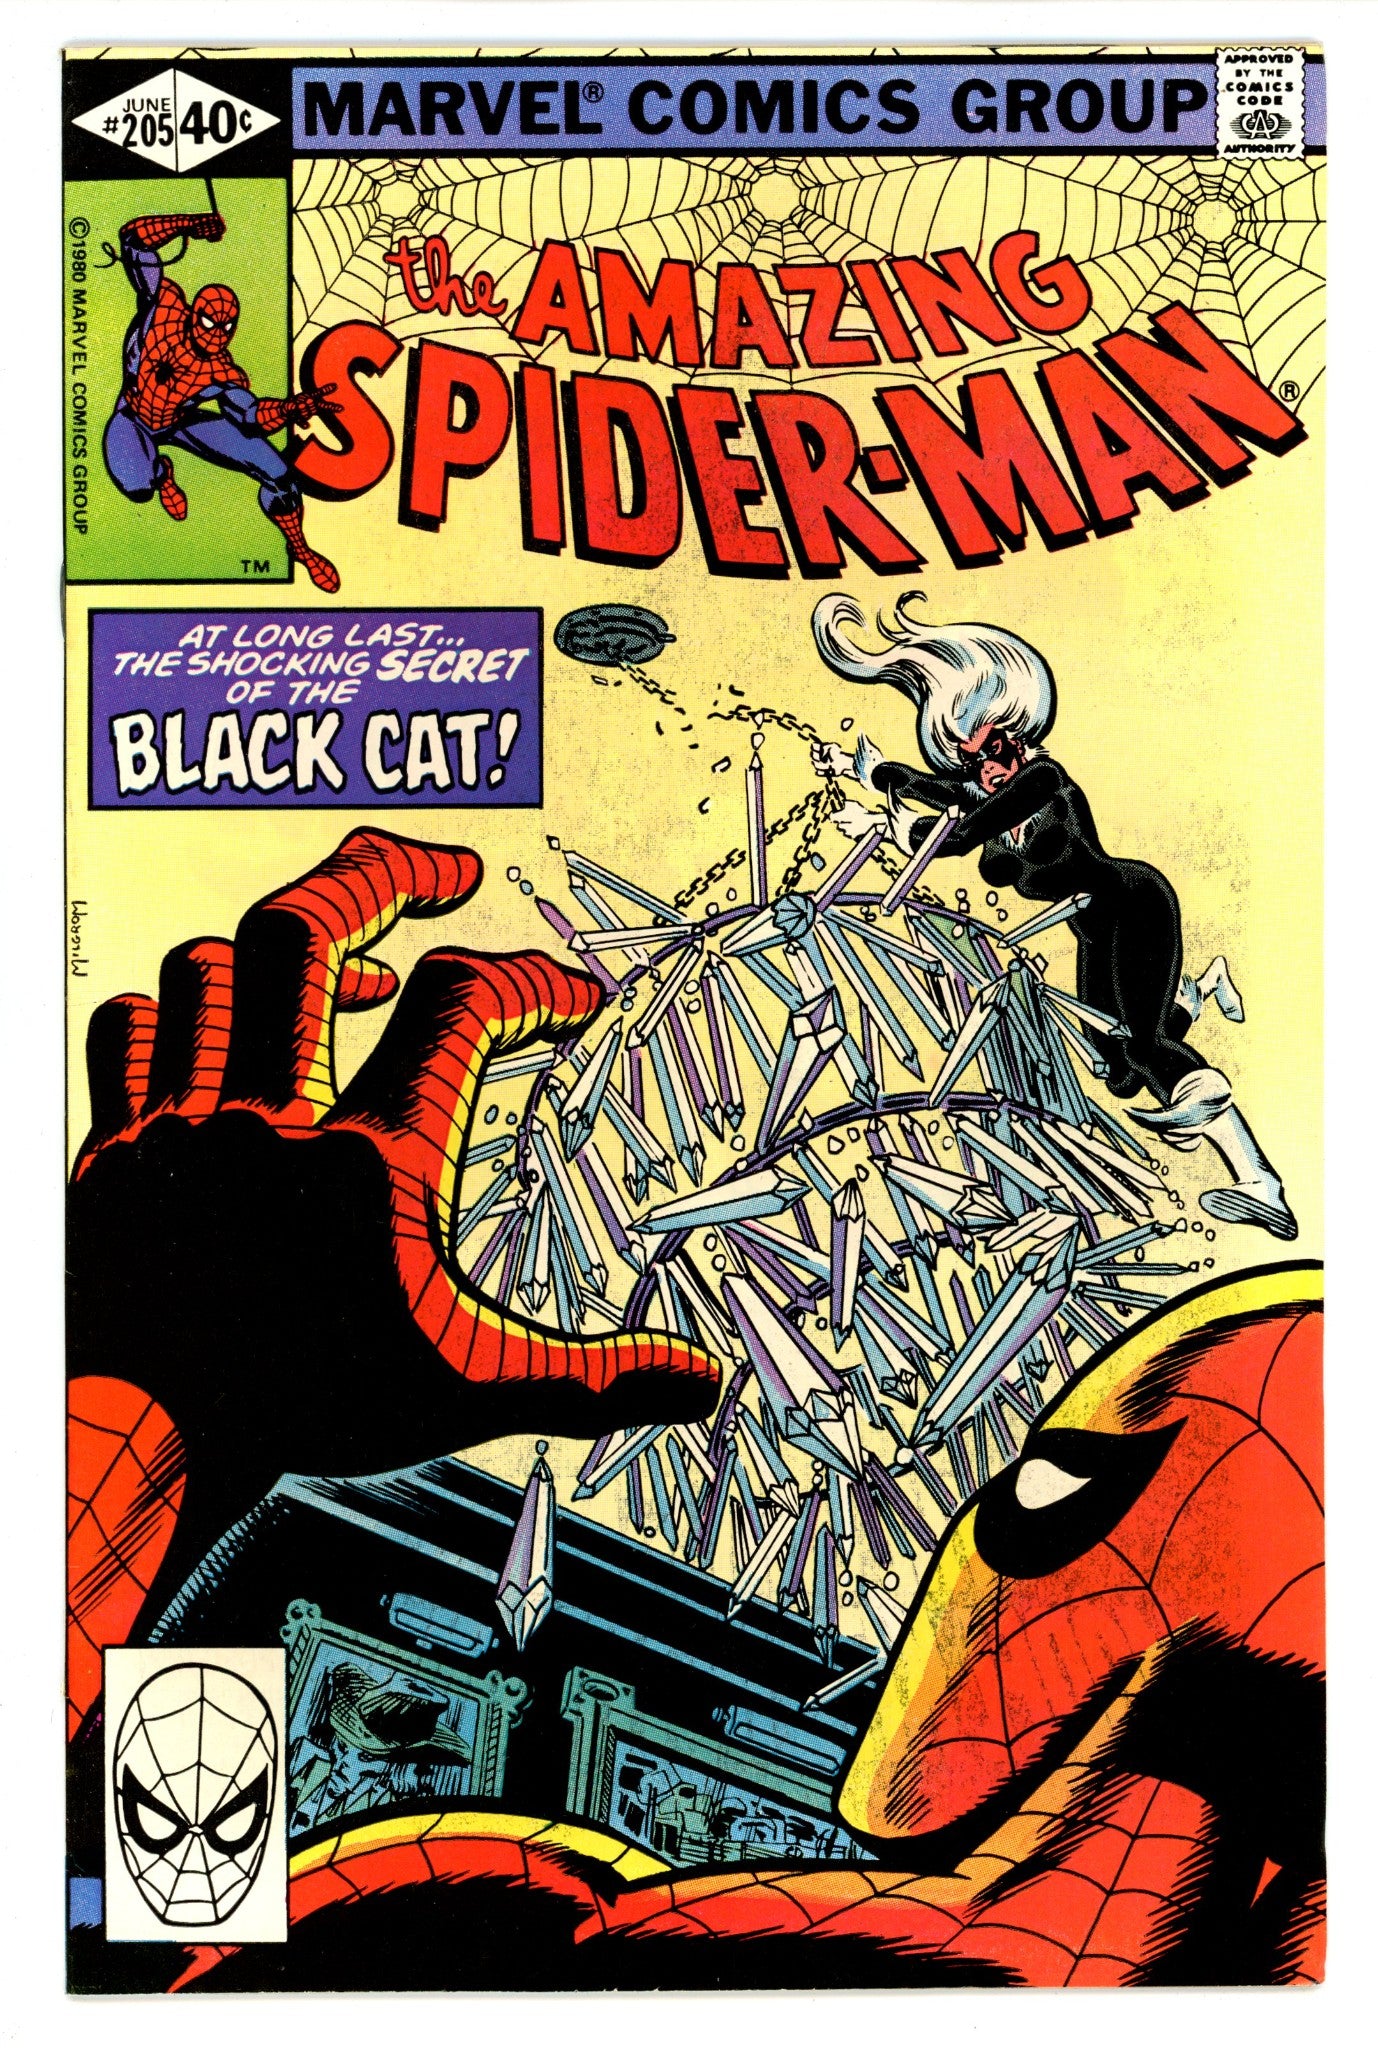 The Amazing Spider-Man Vol 1 205 VF (8.0) (1980) 